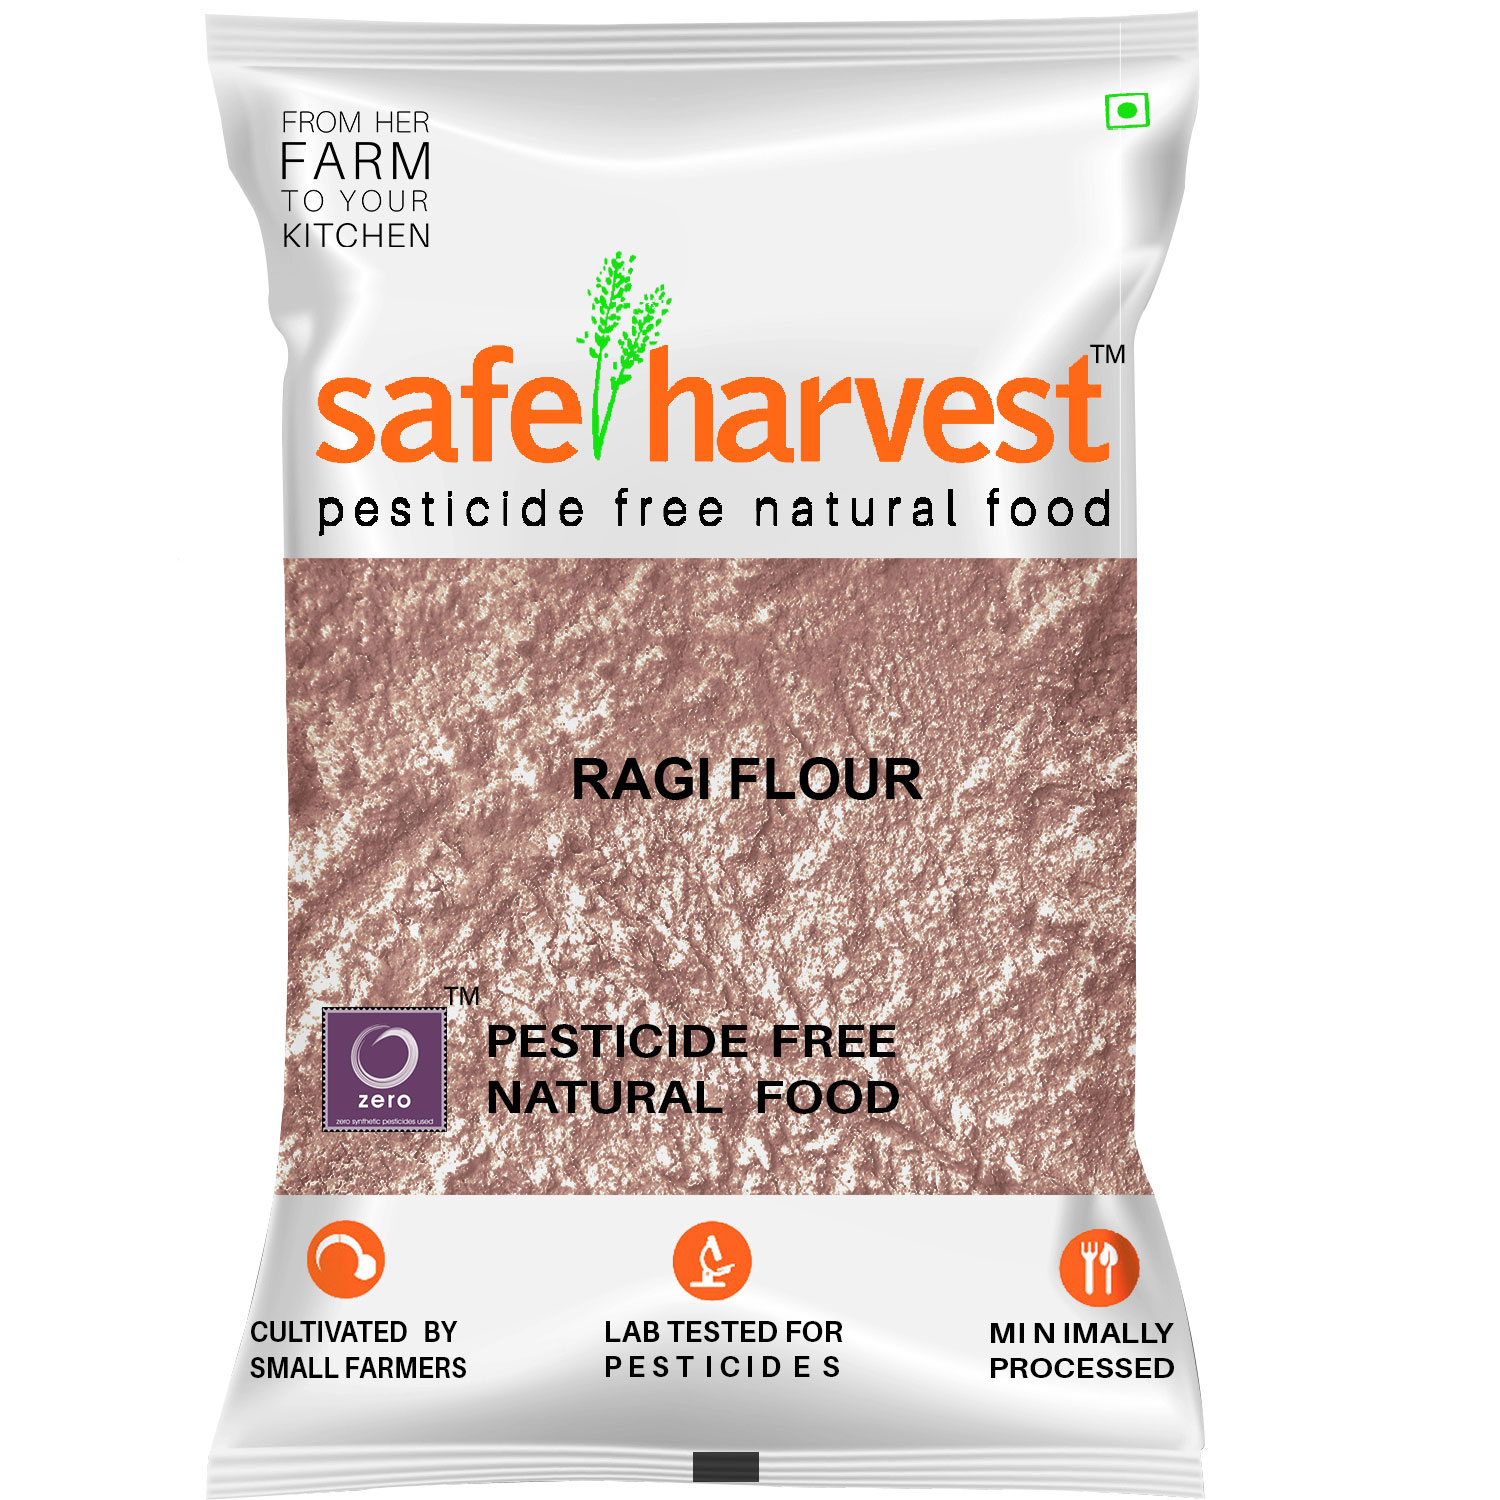 Pesticide free Ragi flour